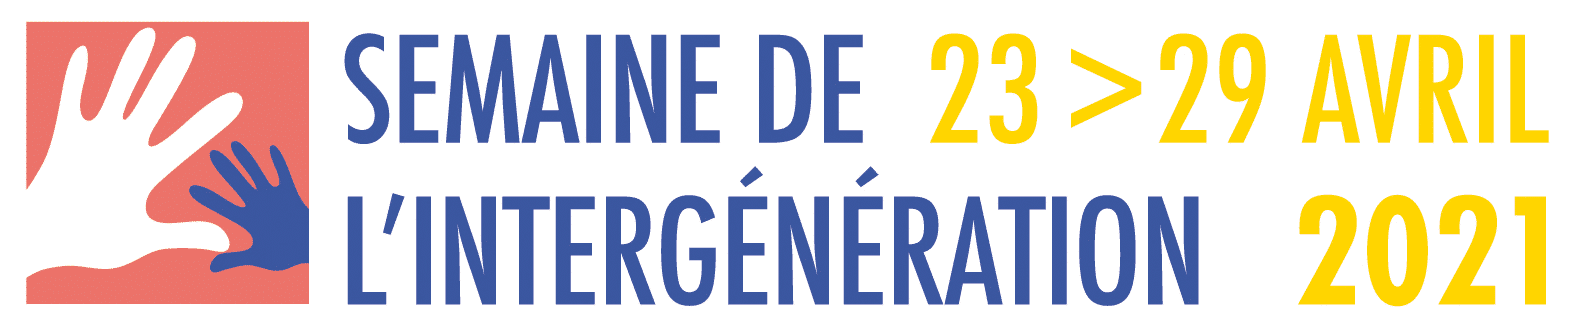 SemaineIntergeneration-avr21-logo